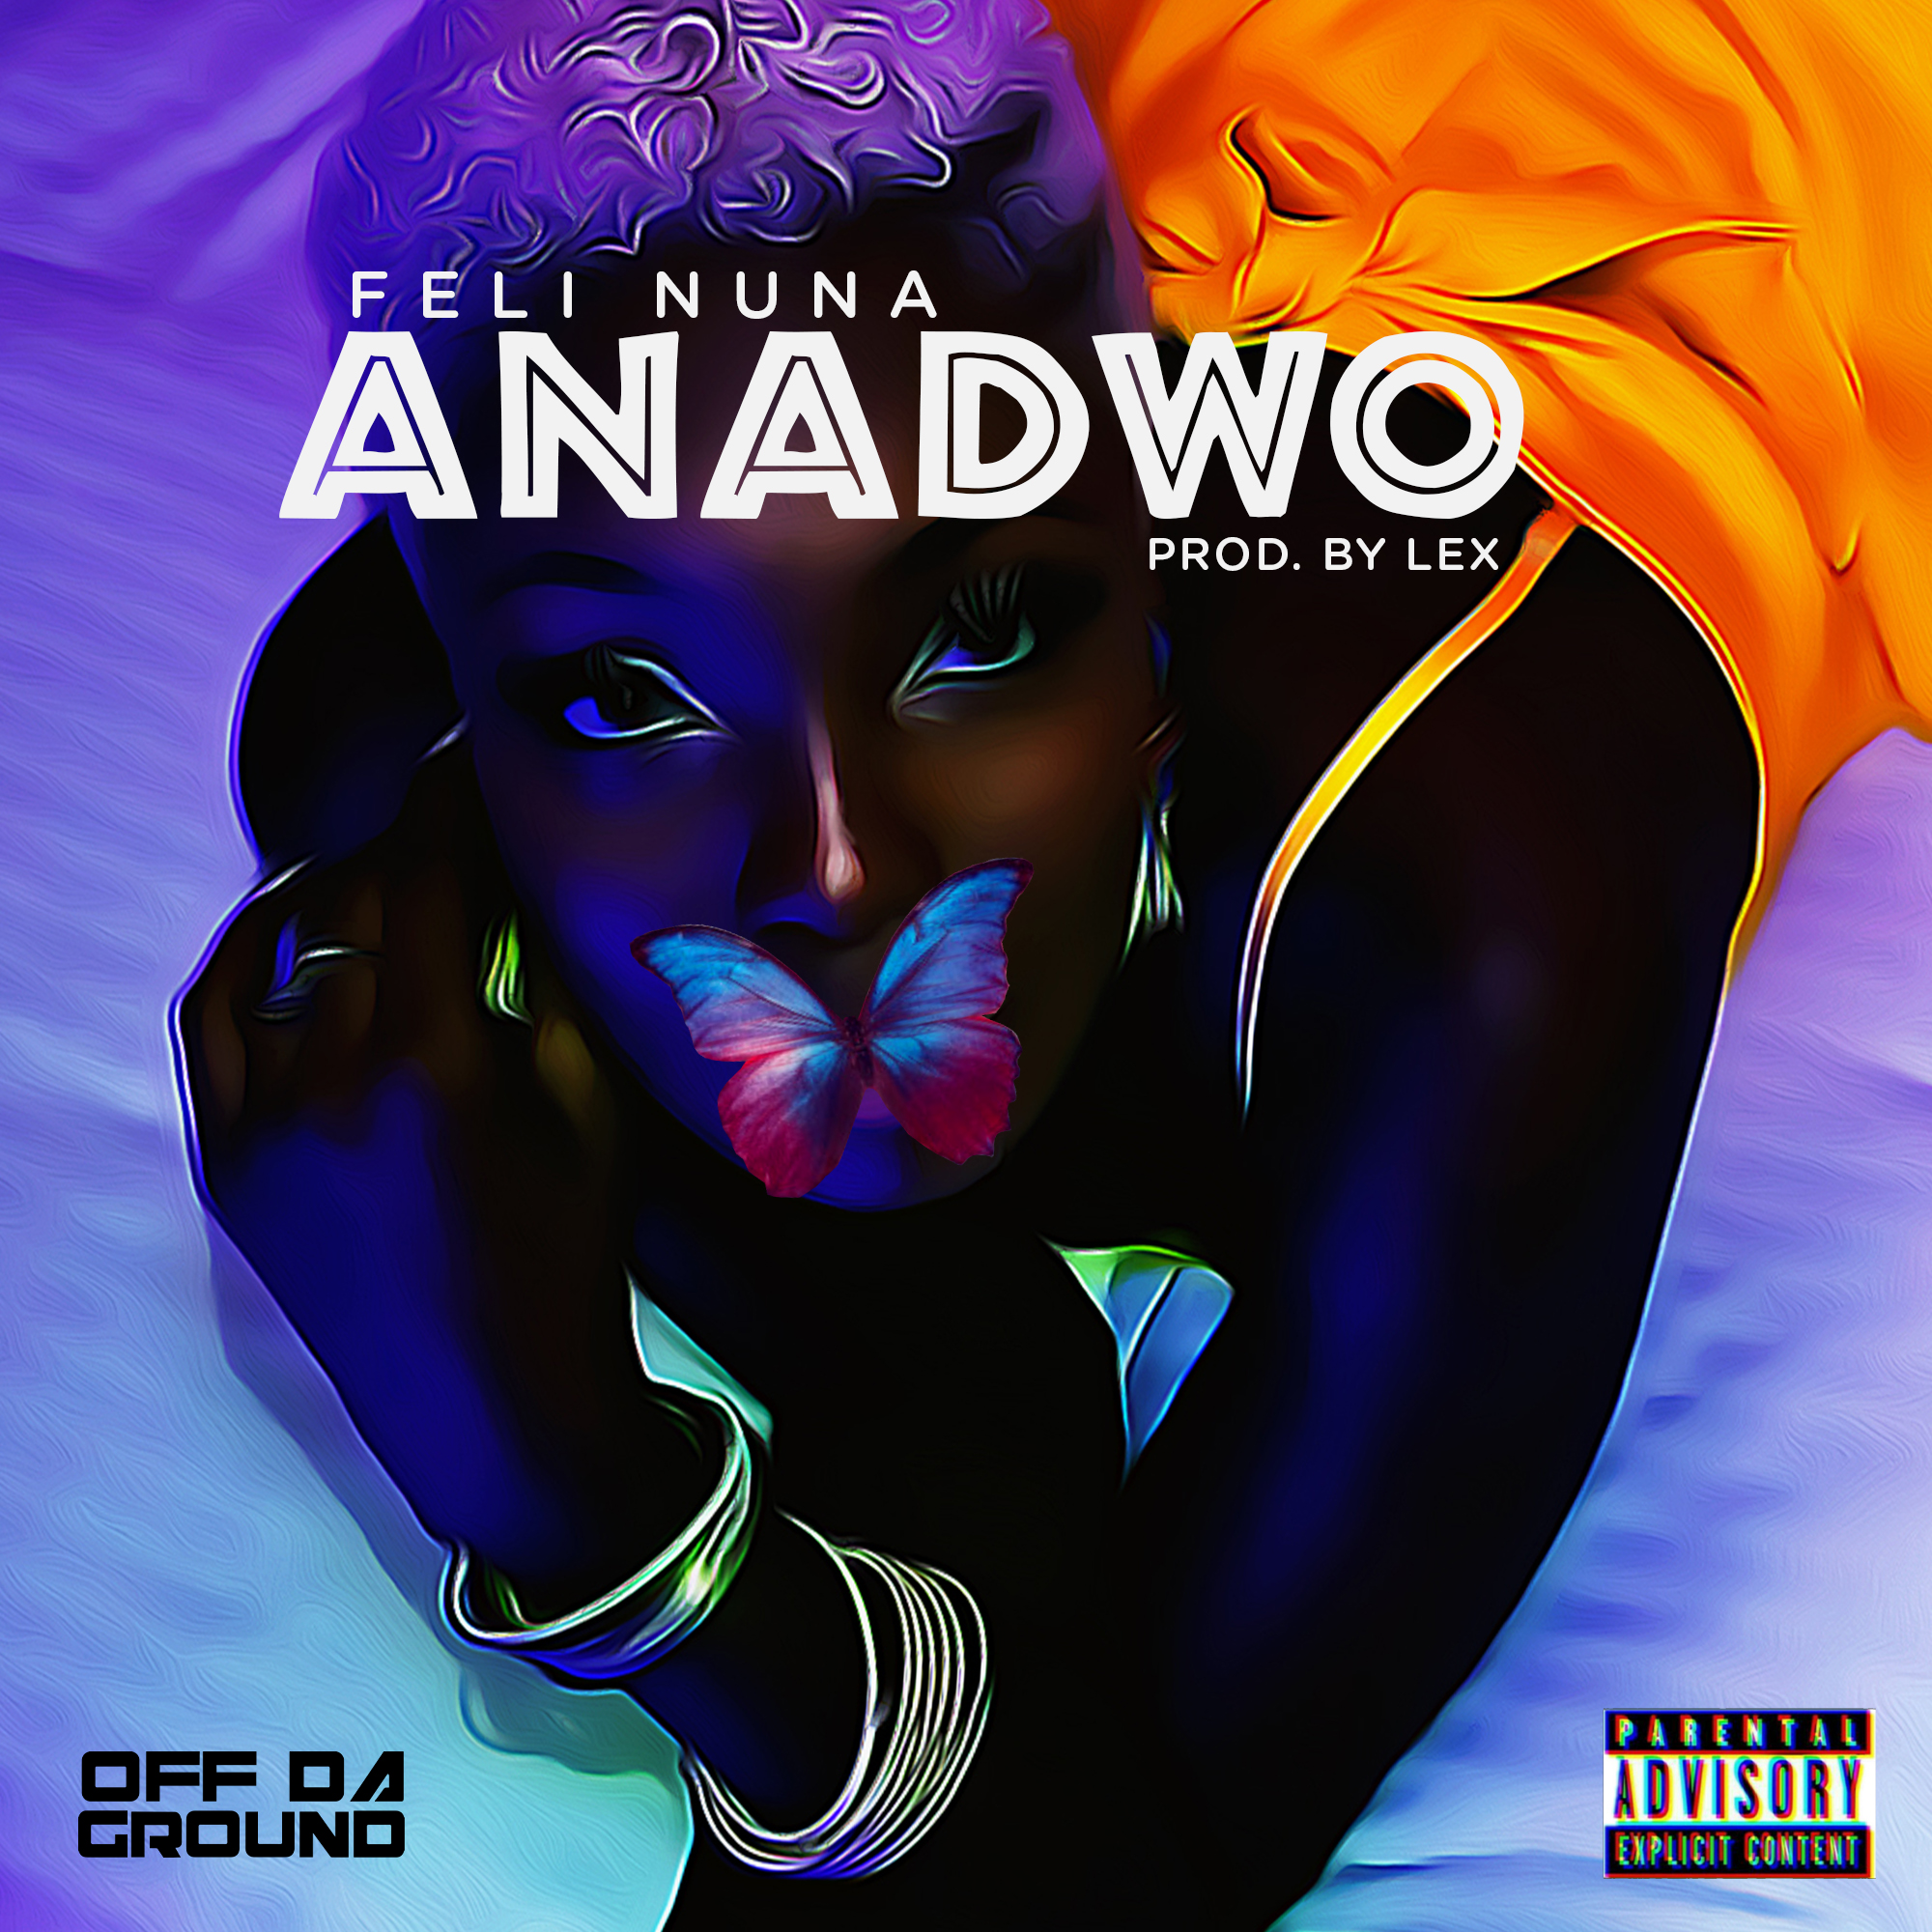 Feli Nuna – Anadwo mp3 download